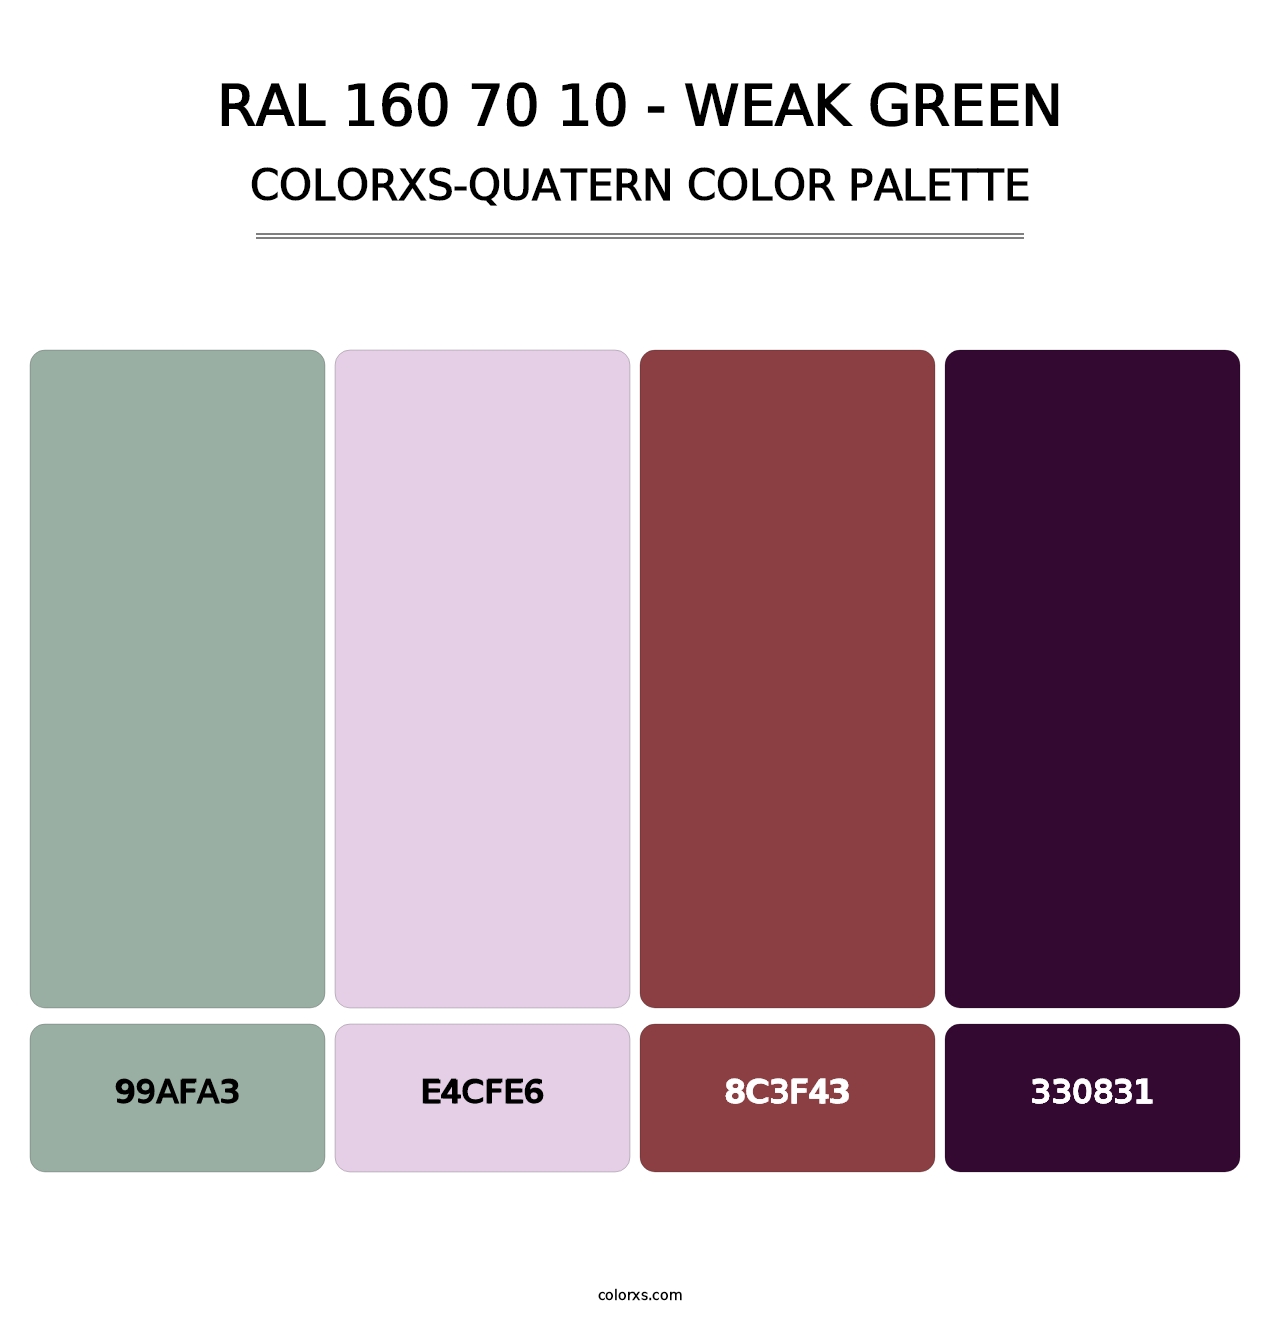 RAL 160 70 10 - Weak Green - Colorxs Quatern Palette